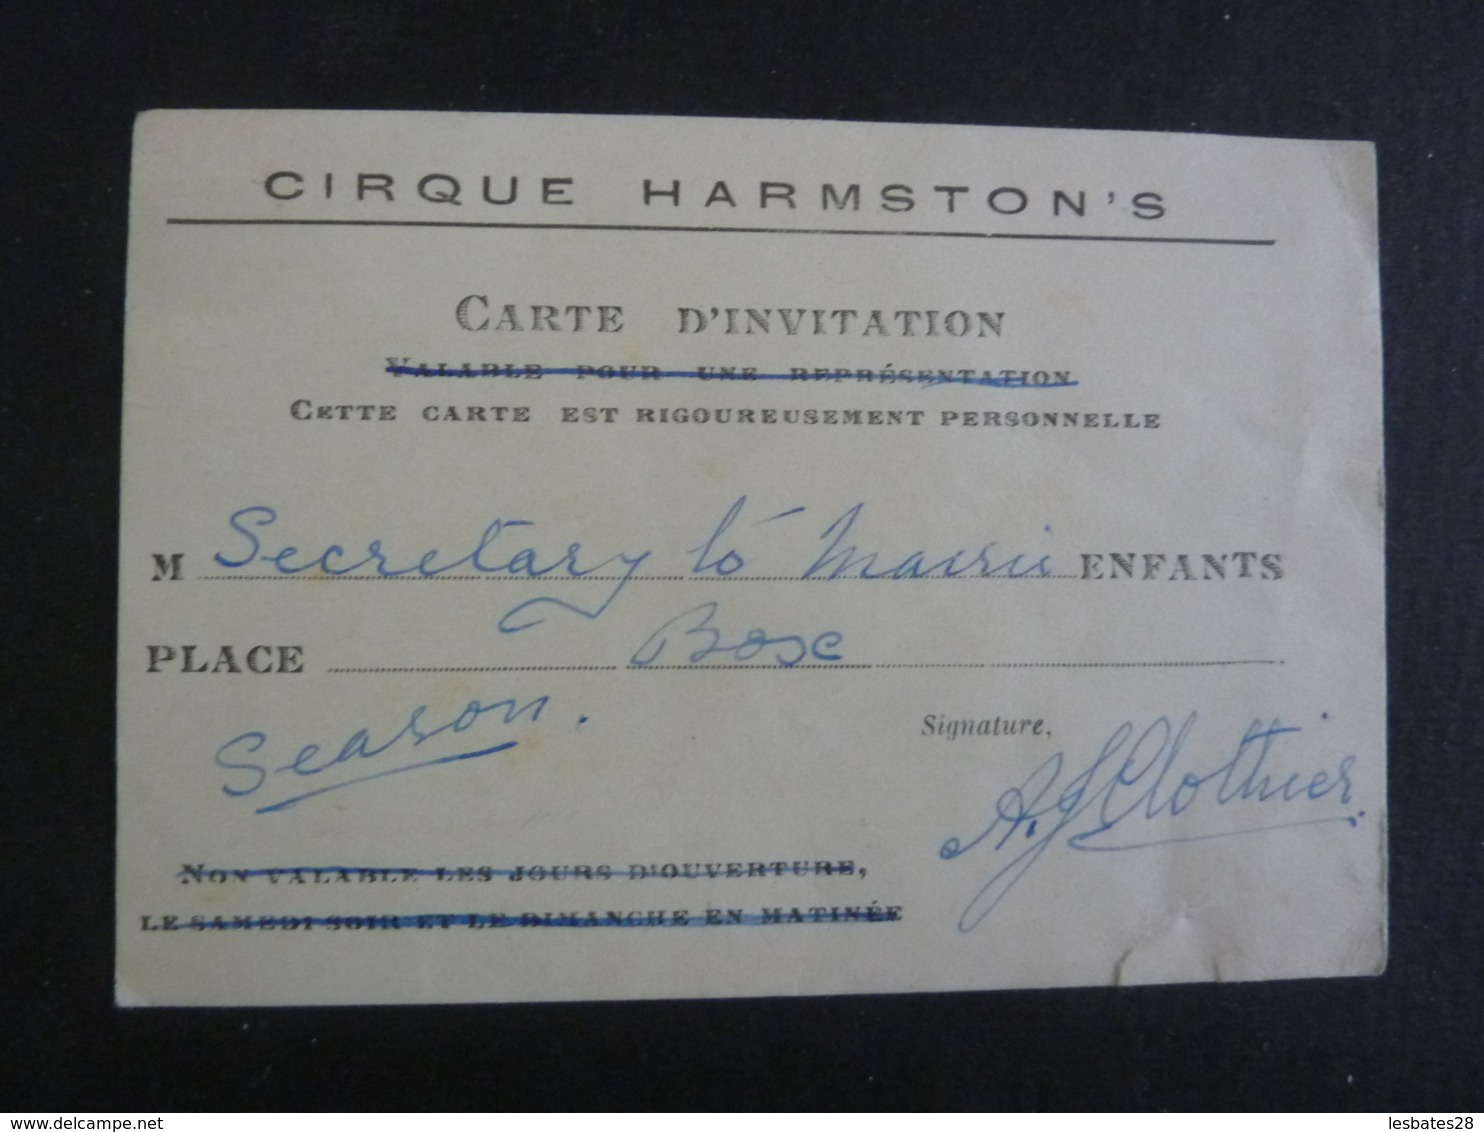 CARTE D'INVITATION  CIRQUE HARMSTON'S RIGOUREUSEMENT PERSONNEL   1930-1940  2018 Alb 5 - Tickets D'entrée